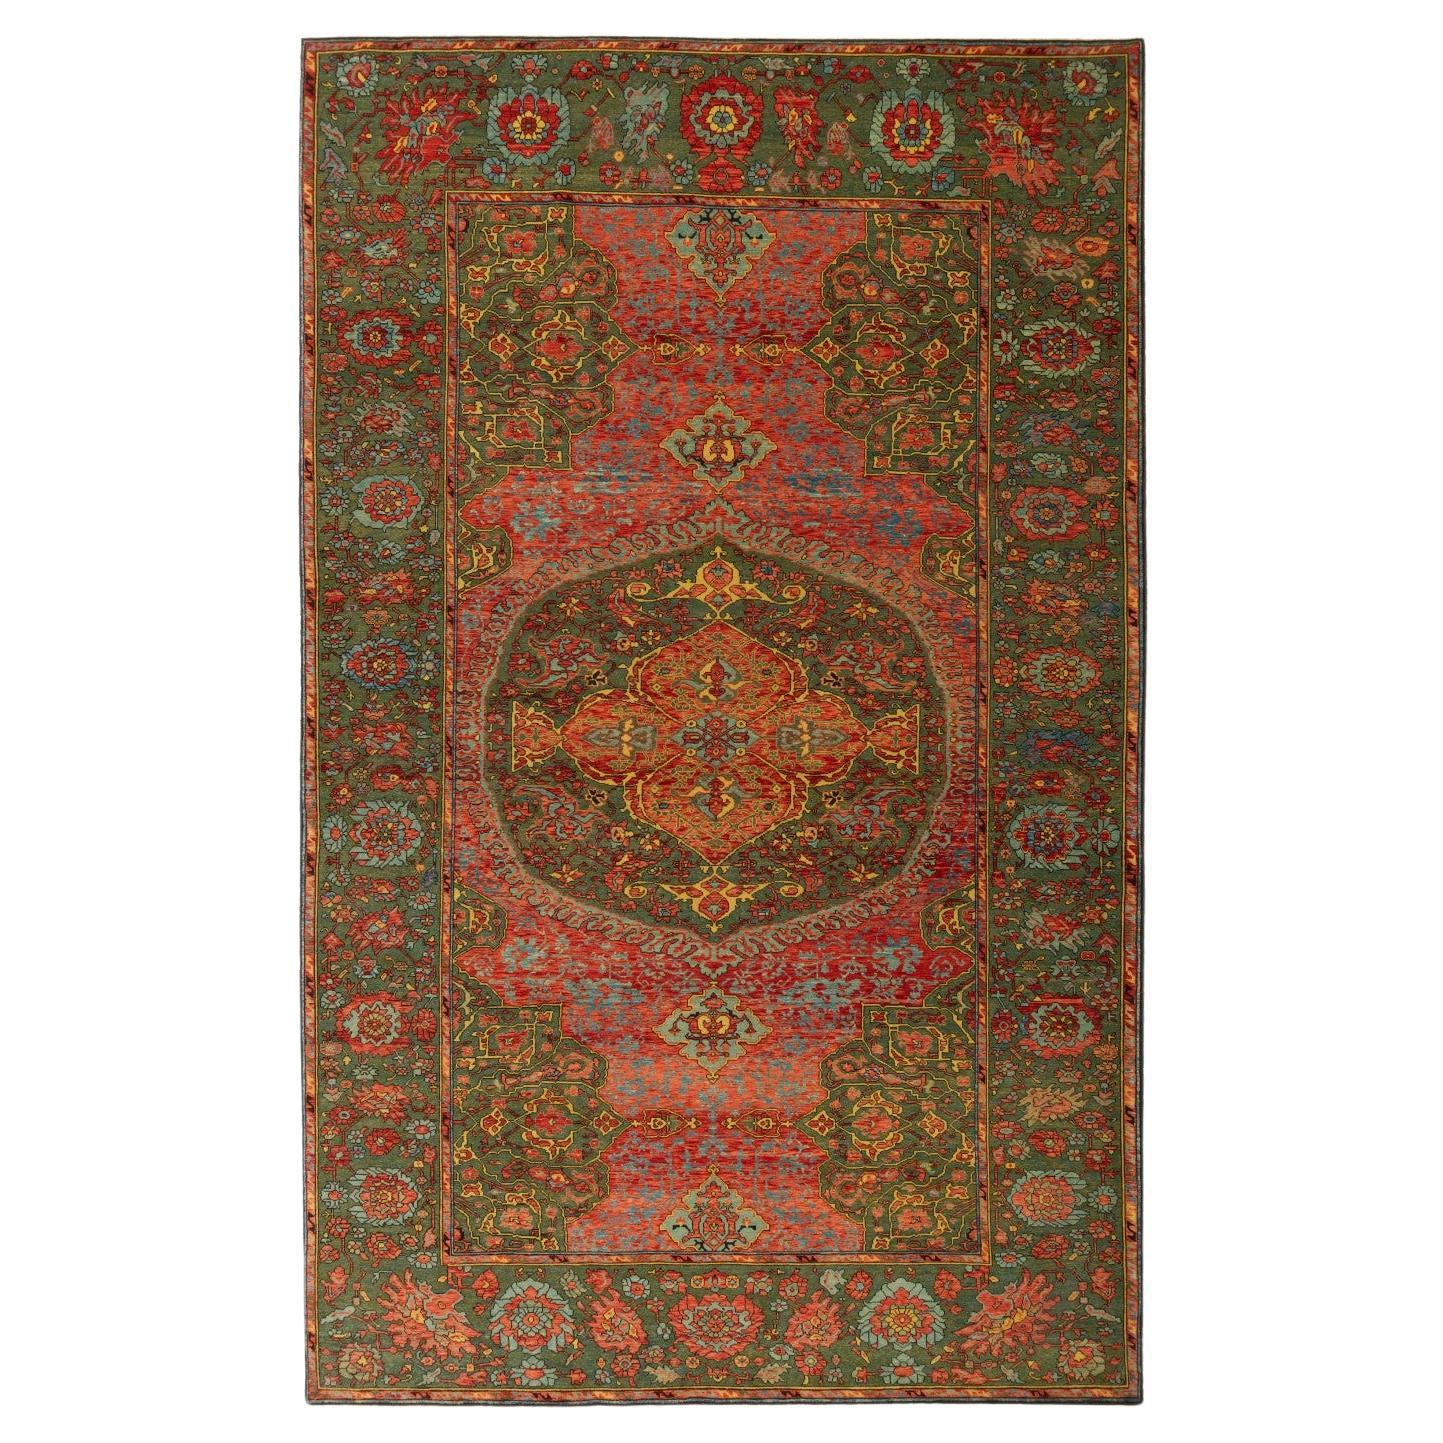 Ararat Rugs Medallion Ushak Carpet Museum Piece 17th C. Revival Rug Natural Dyed